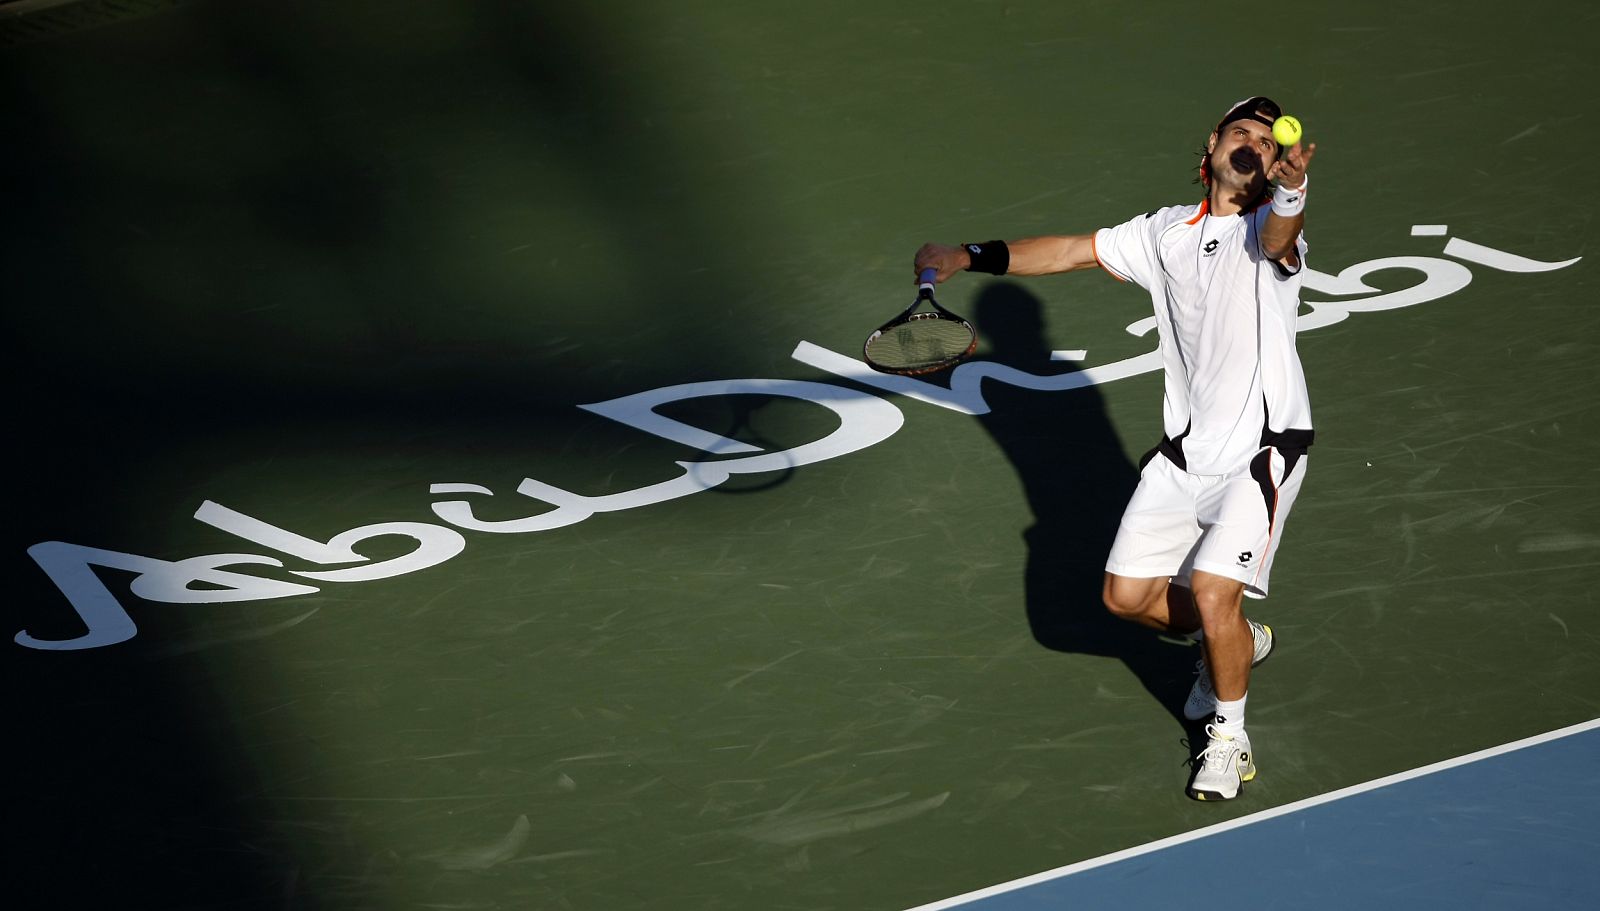 Spain's David Ferrer serves against Russia's Nikolay Davydenko at the Capitala World Tennis Championship in Abu Dhabi